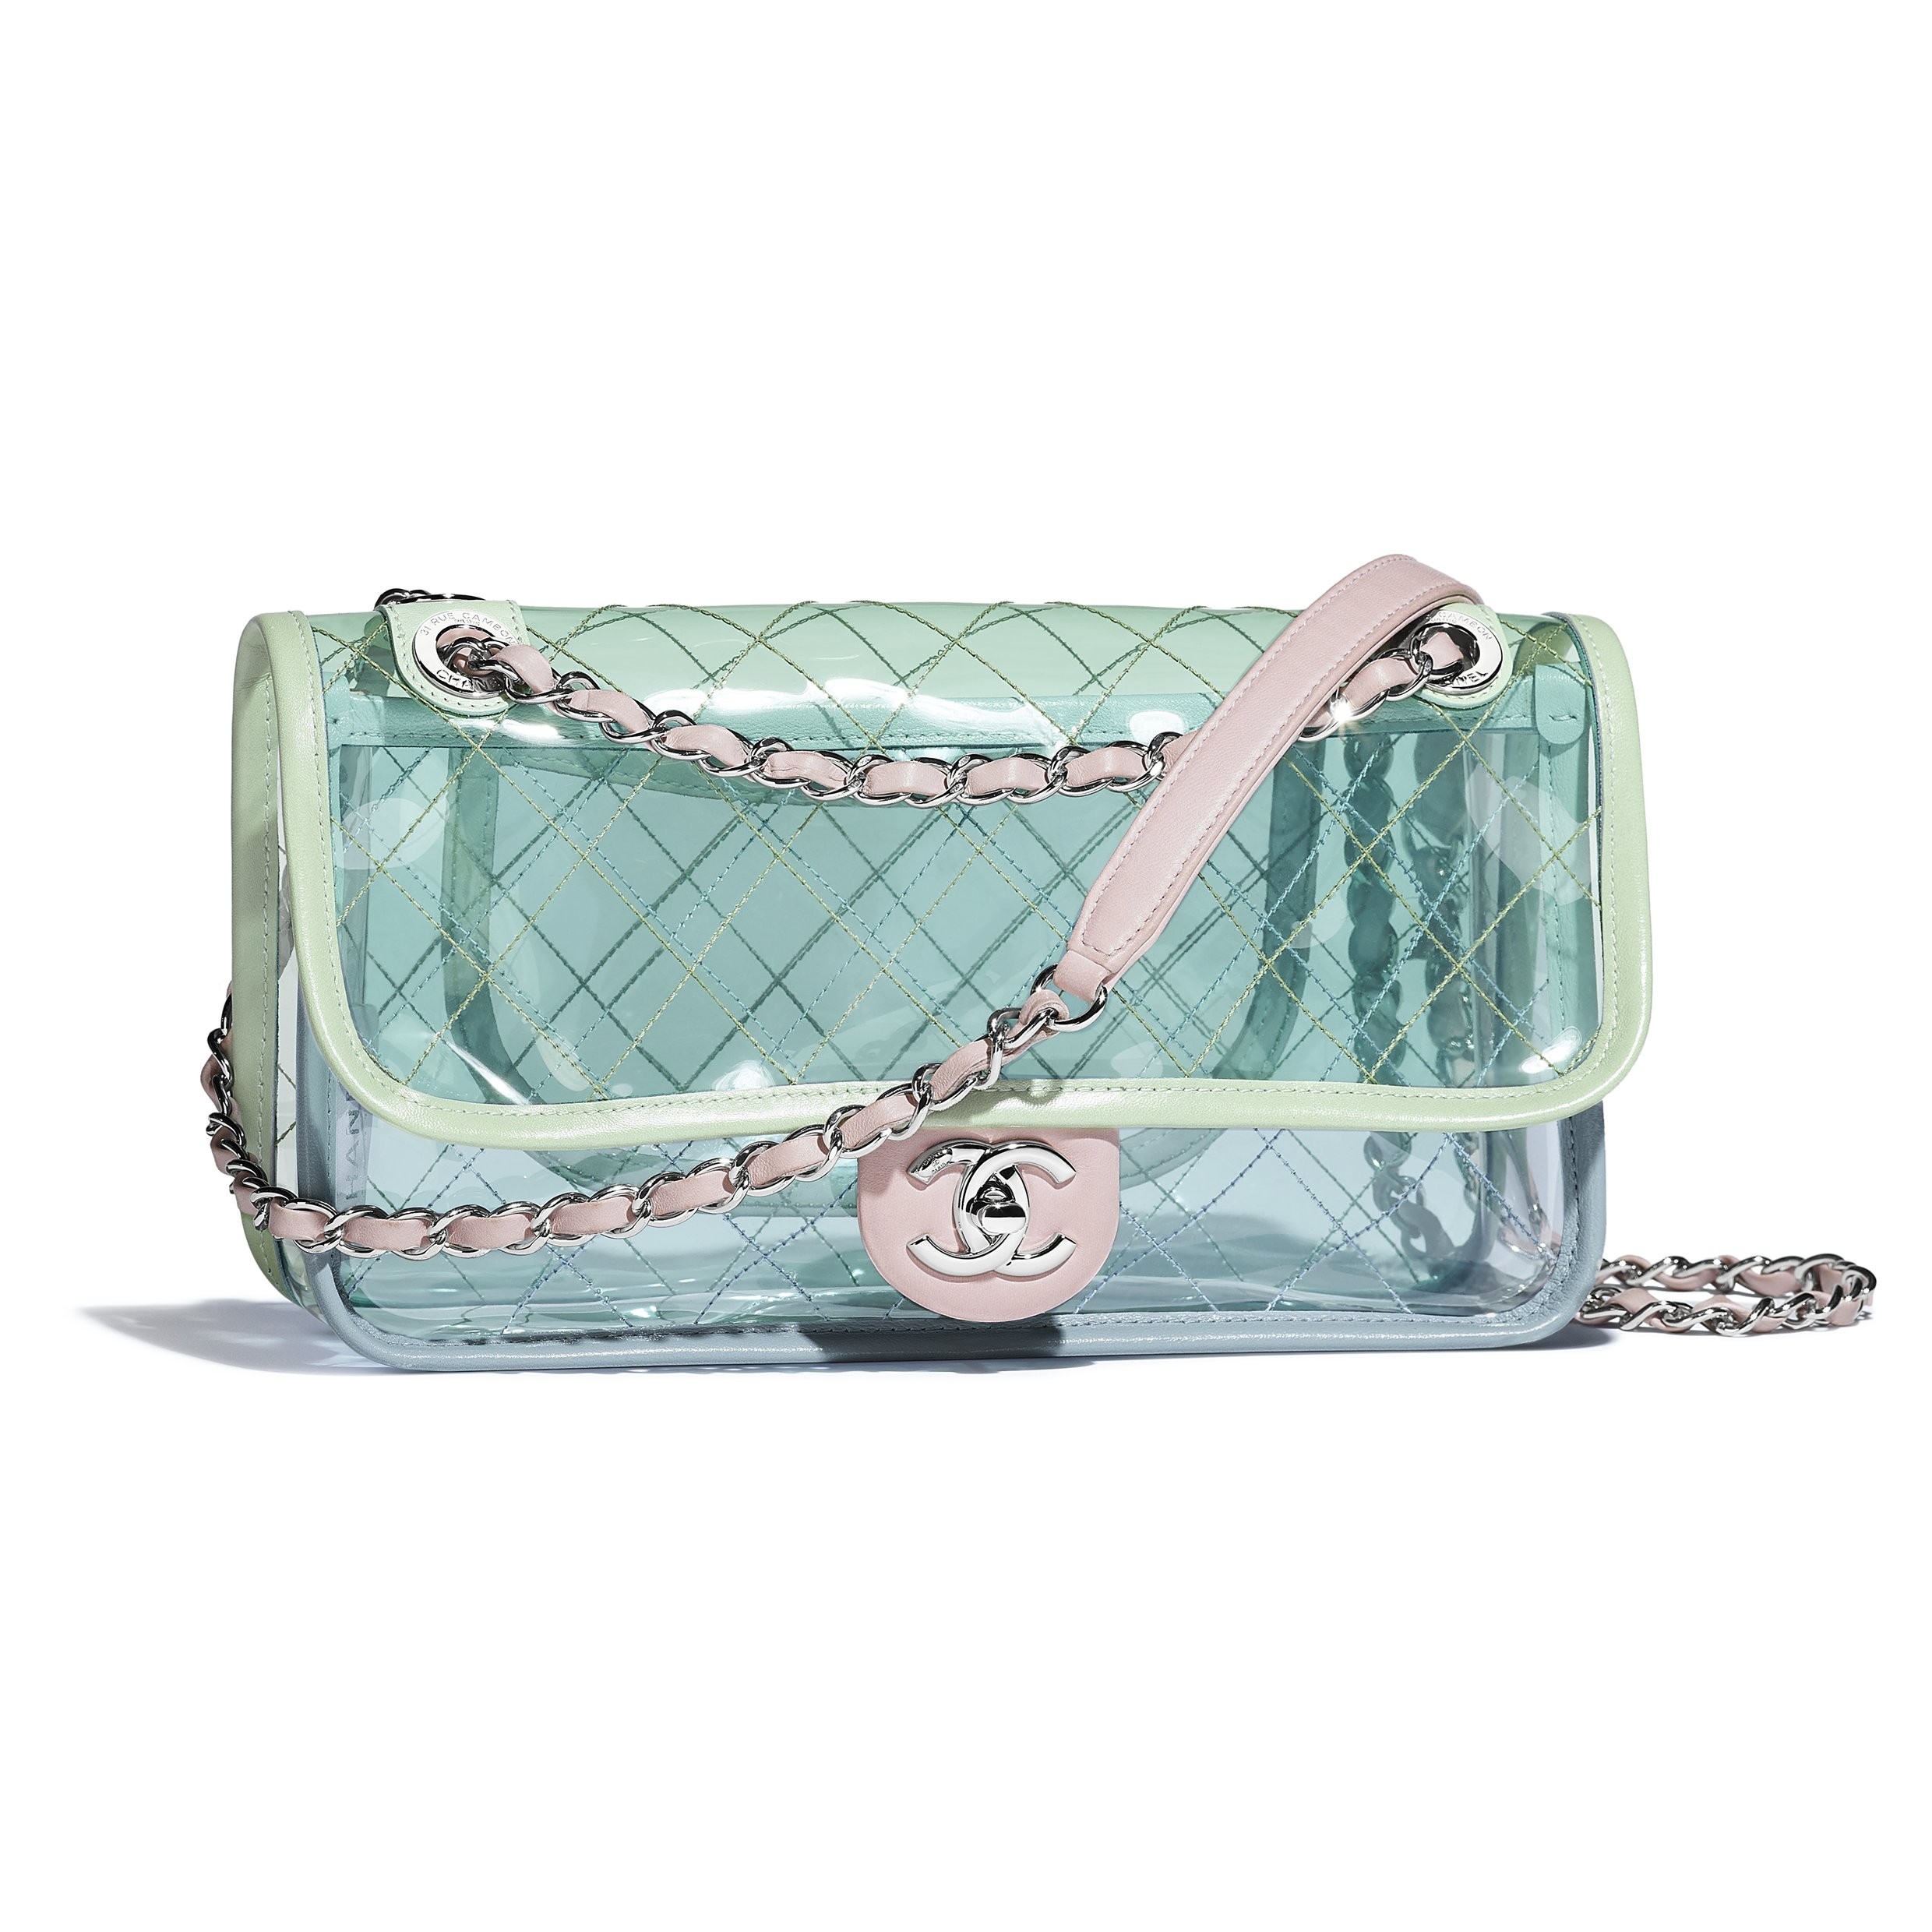 Chanel 2018 Limited Edition Coco Splash Flap Bag